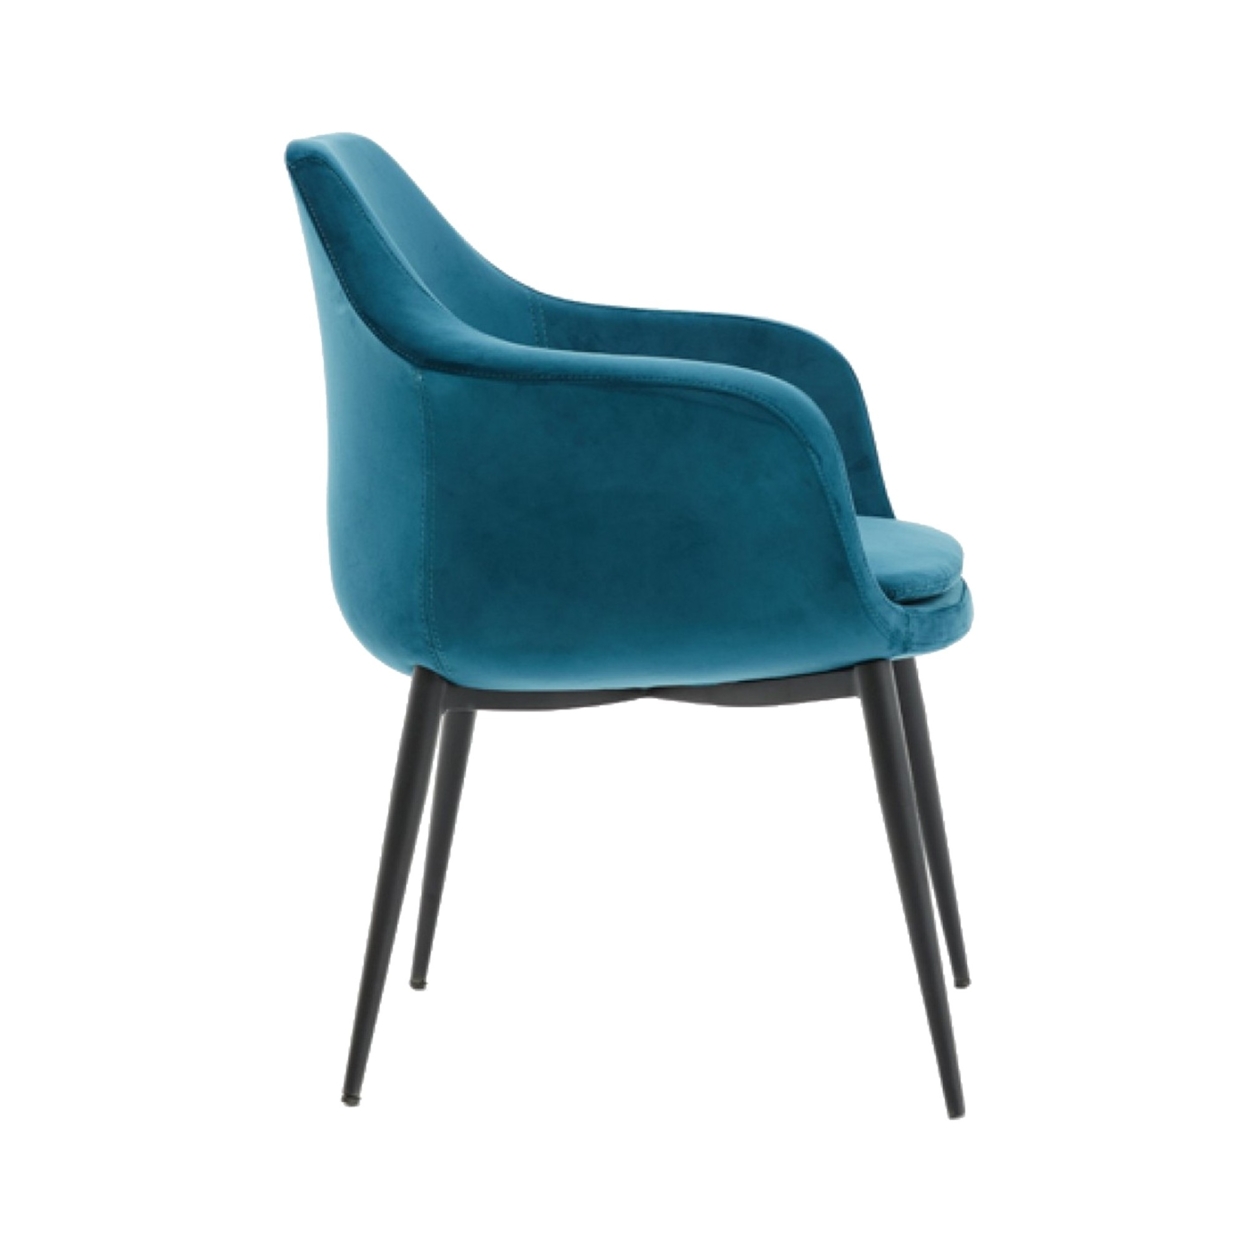 Velvet Upholstered Dining Chair With Padded Seat And Tapered Legs, Blue- Saltoro Sherpi